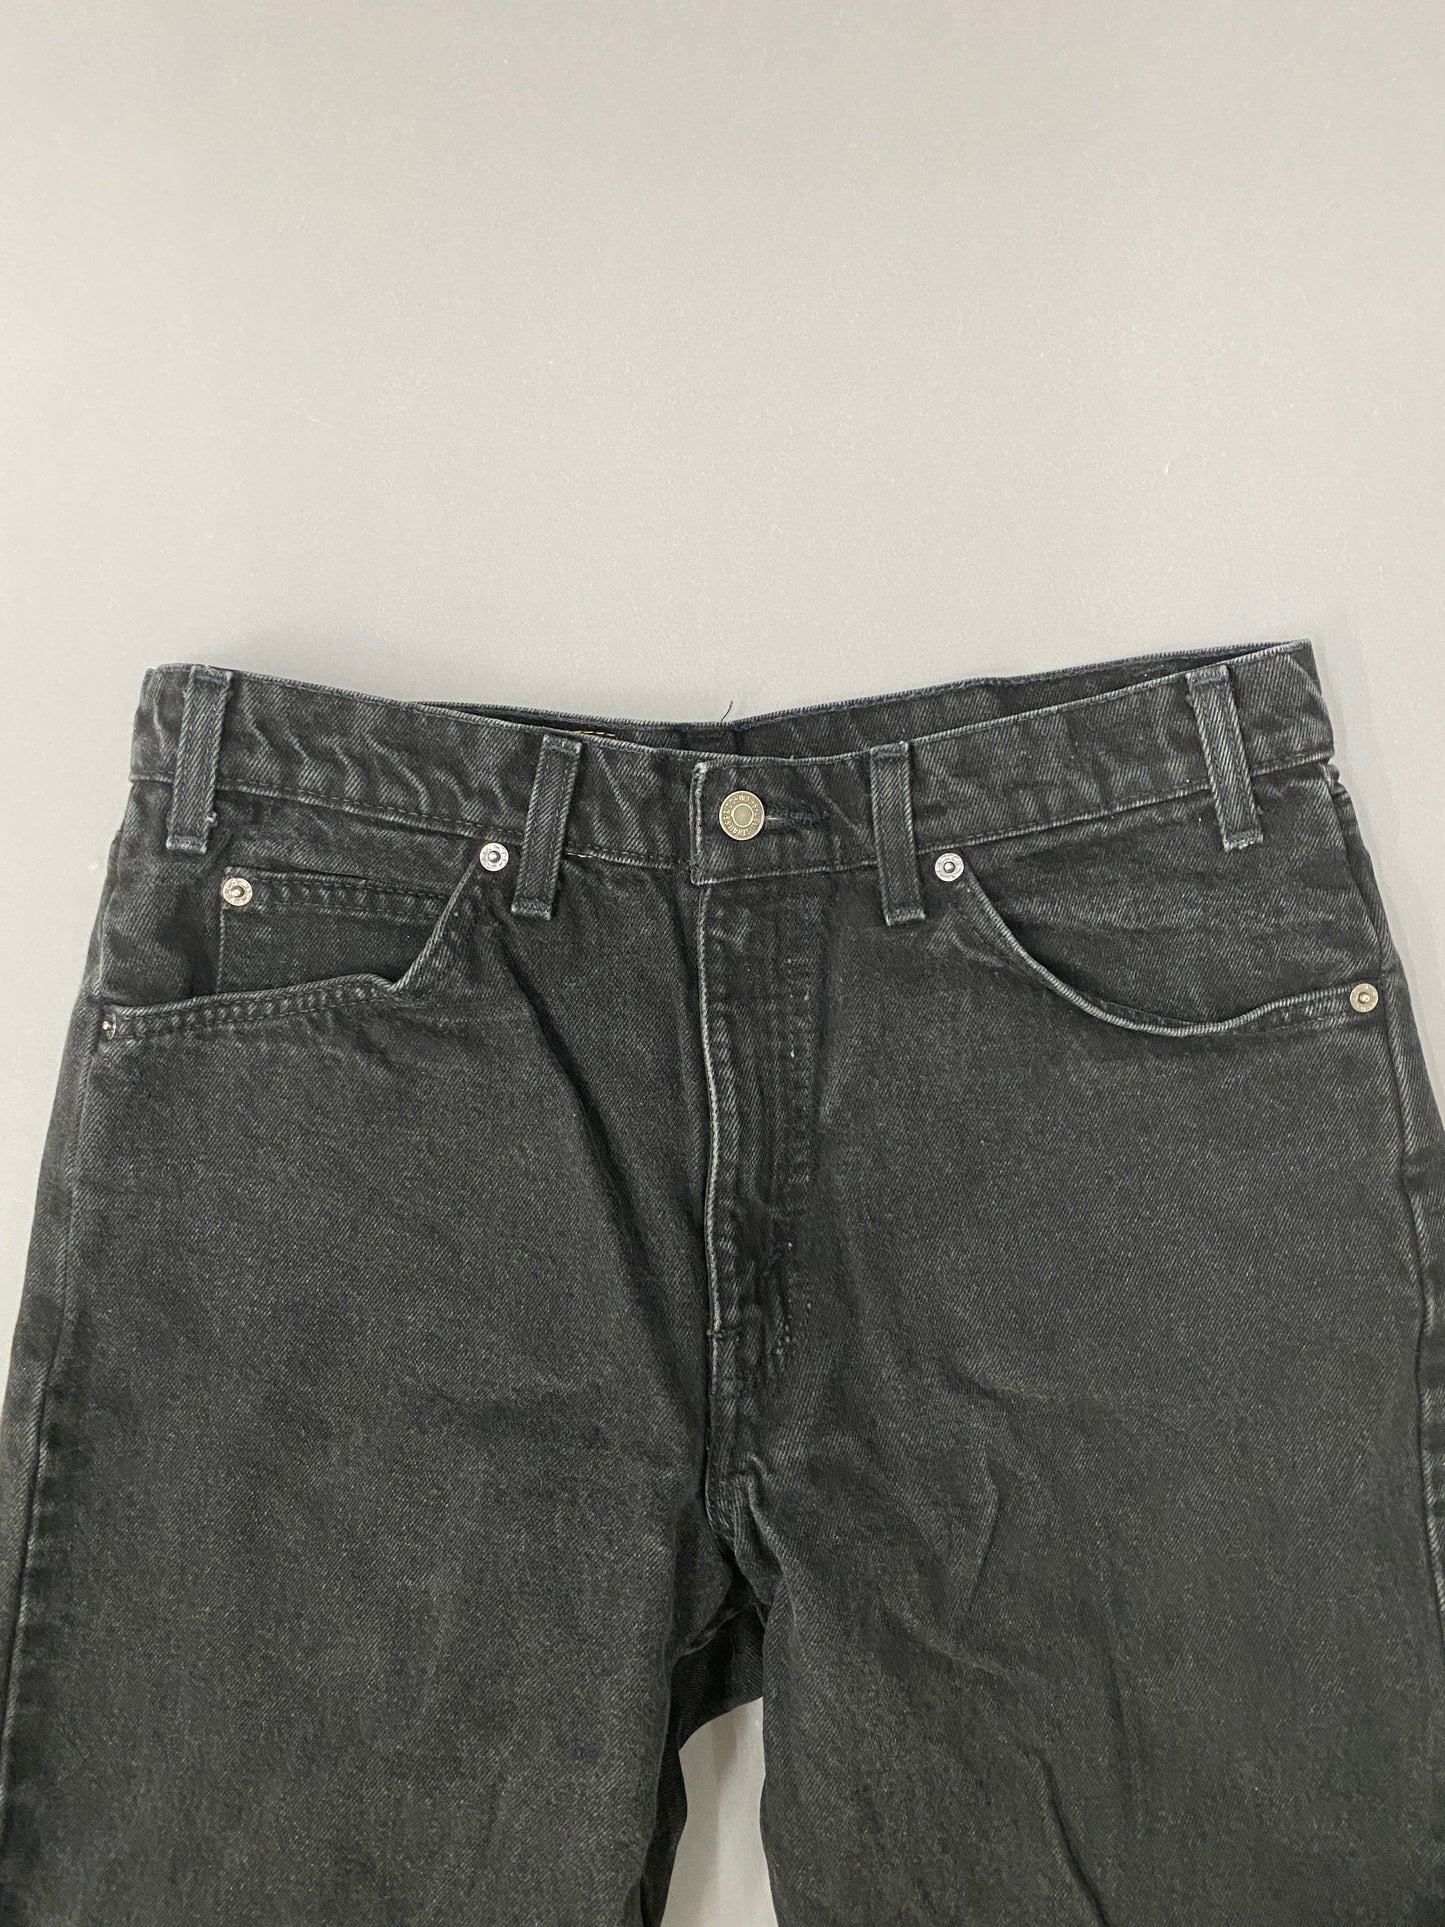 Levis Orange Tab Jeans - 33 x 30